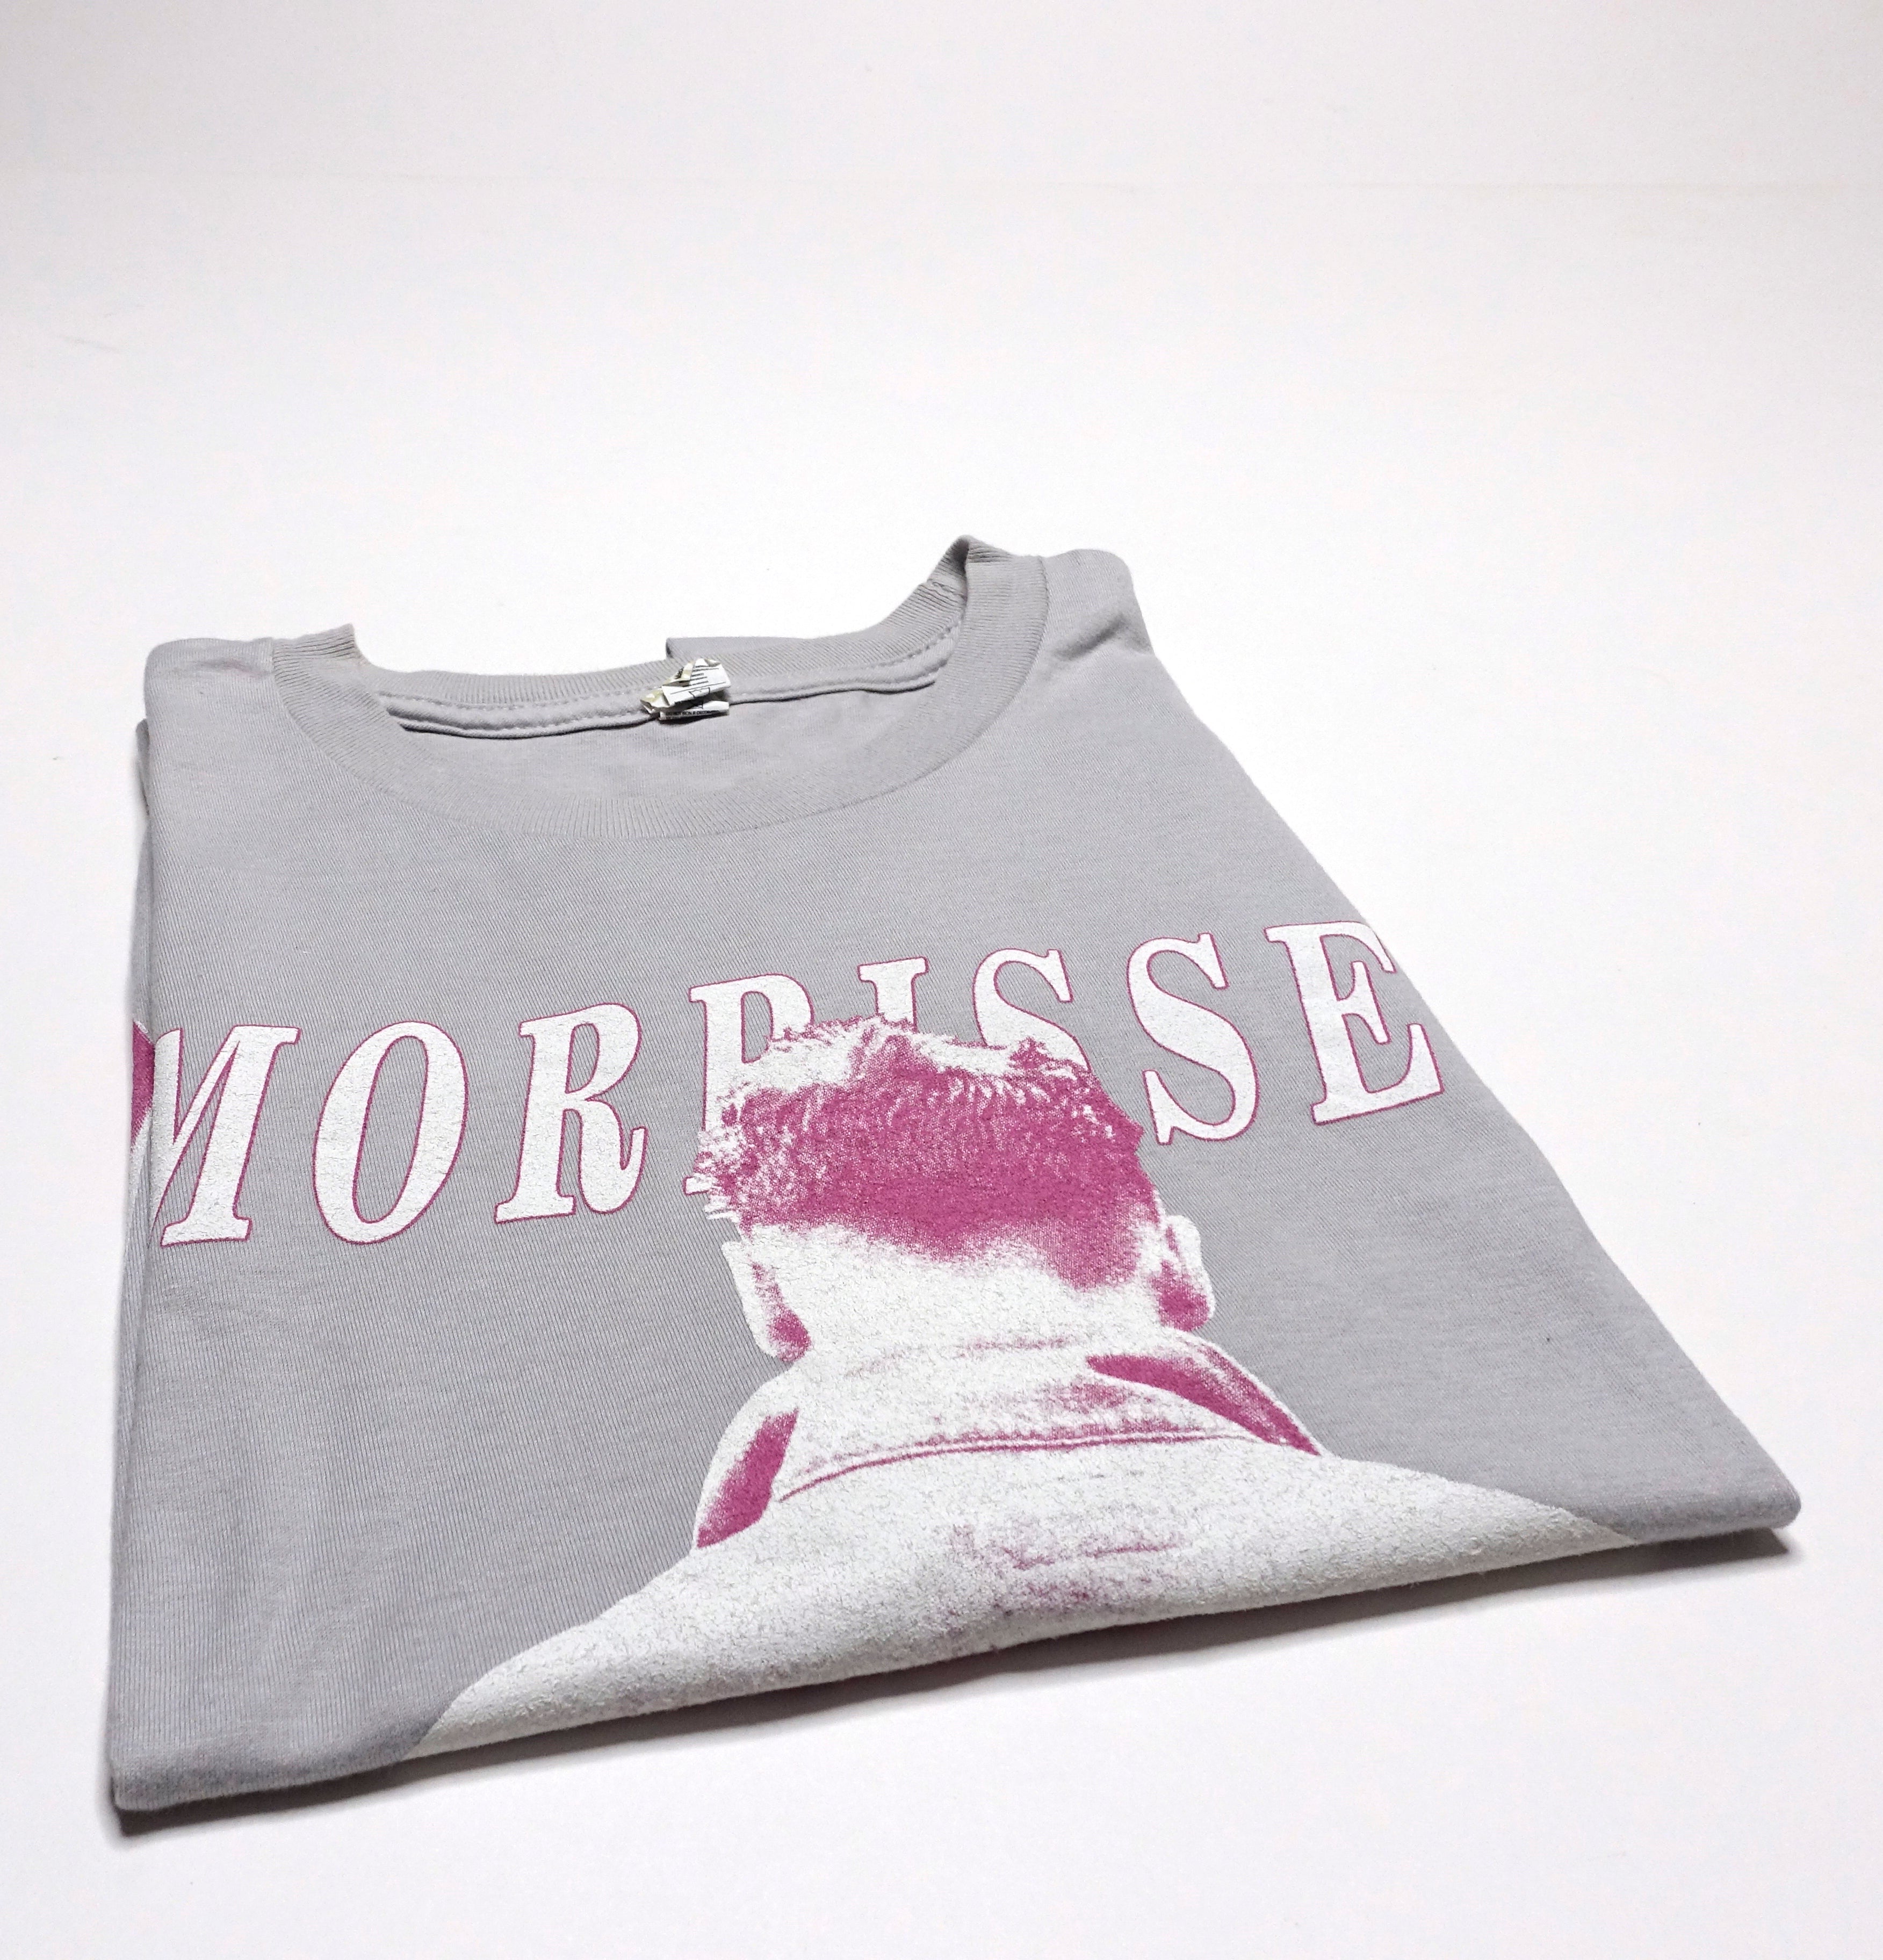 Morrissey - November Spawned A Monster Shirt Size Large (Homemade)